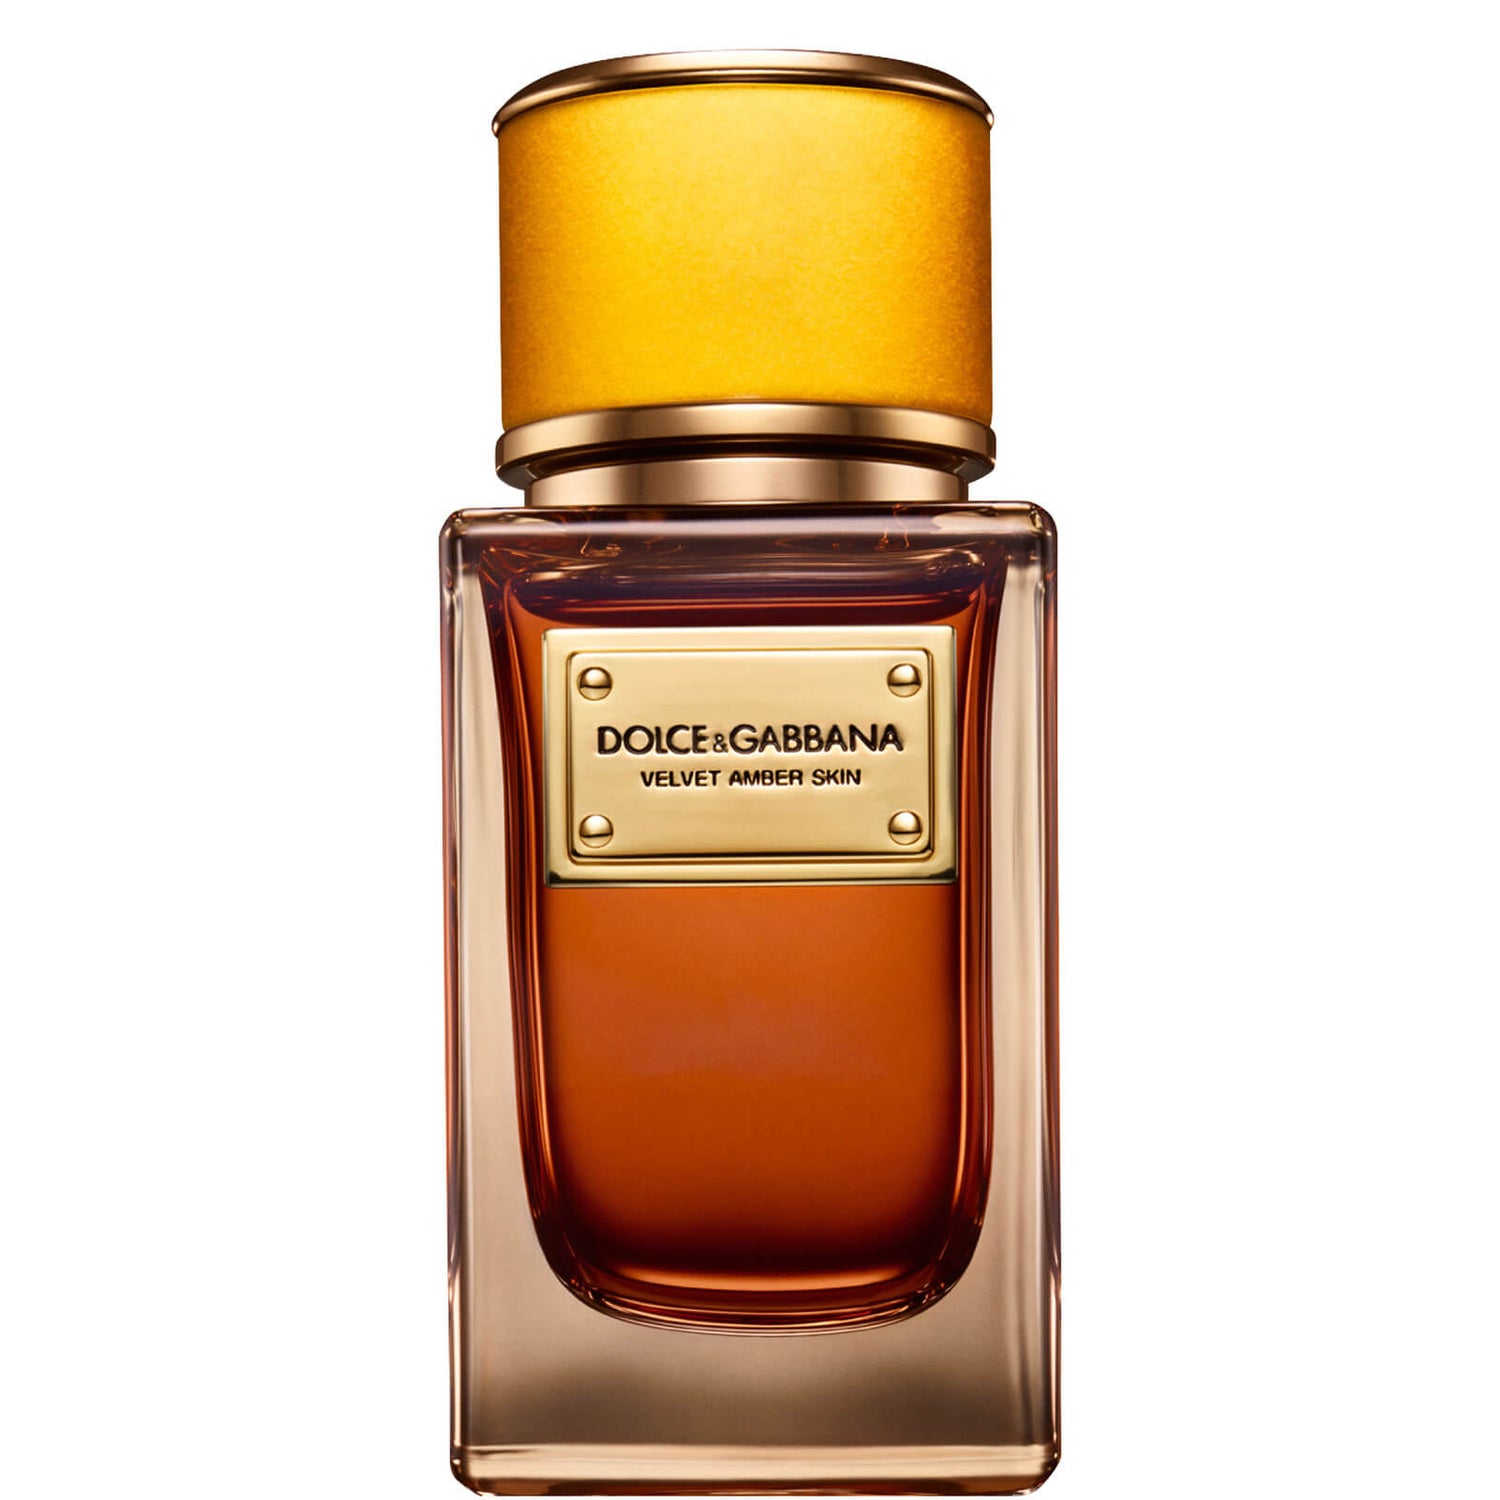 Dolce&Gabbana Velvet Amber Skin Eau de Parfum - 50ml